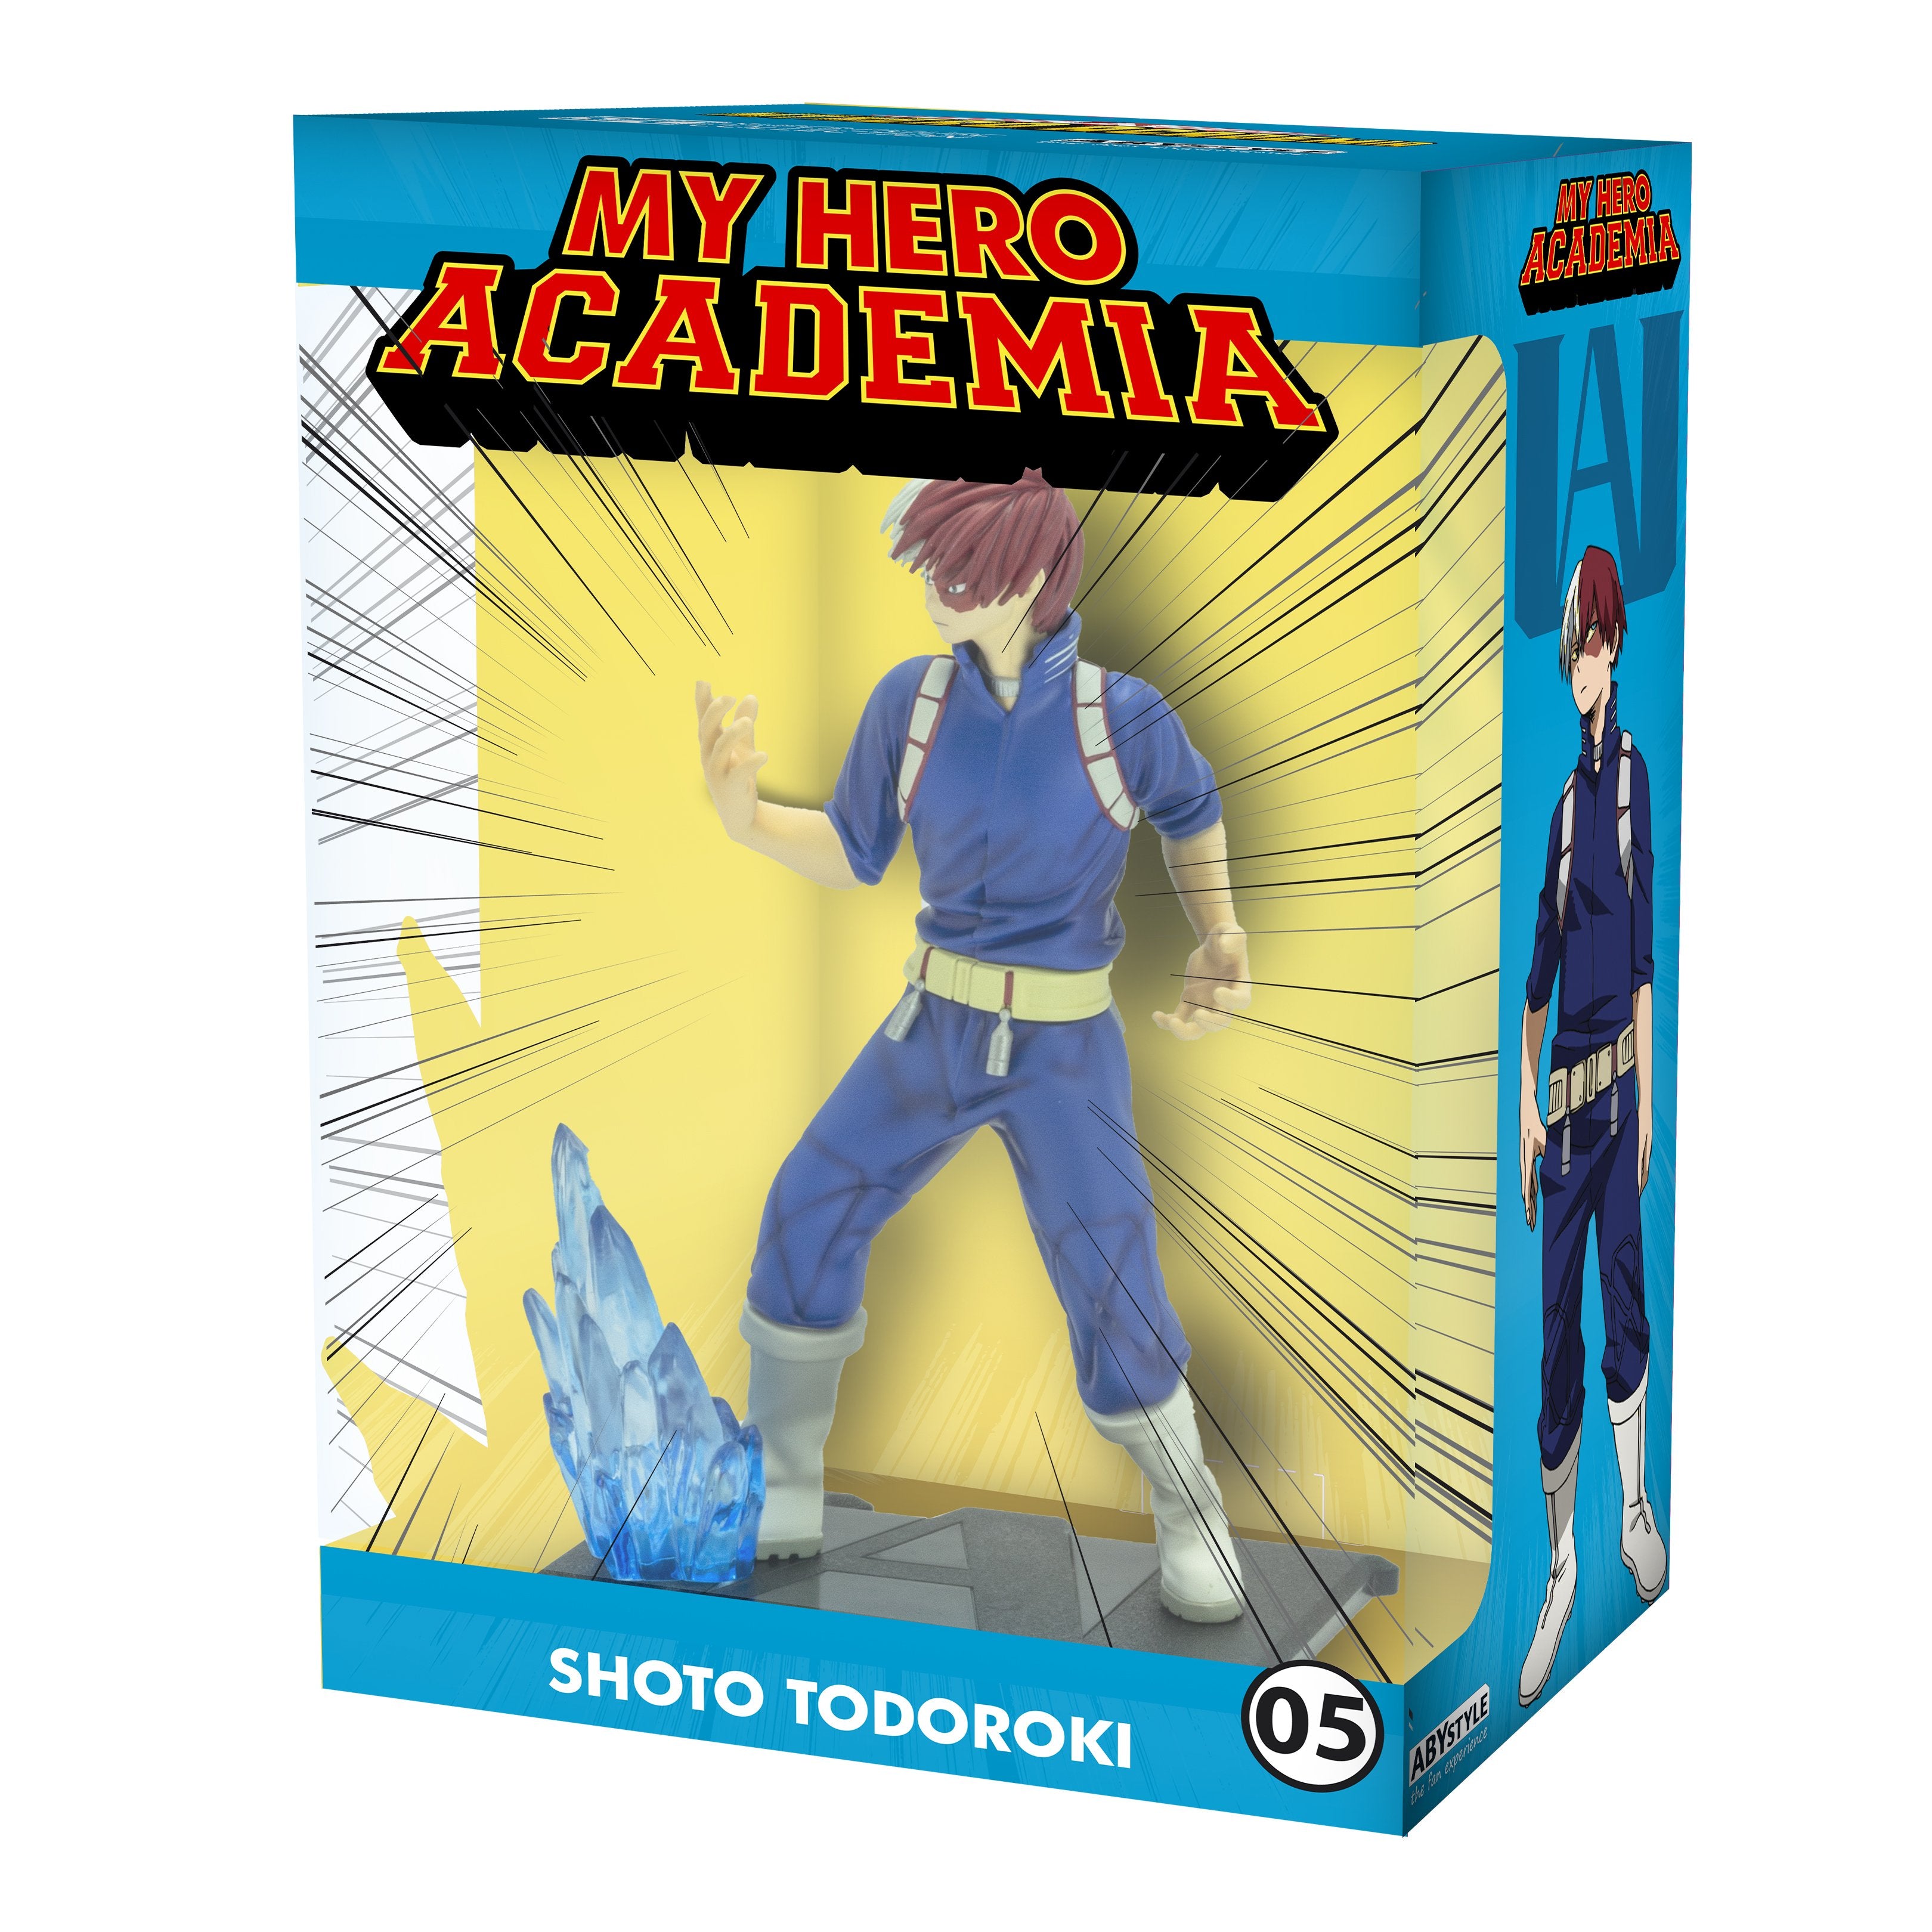 My Hero Academia - Shoto Todoroki Abysse Figurine image count 6